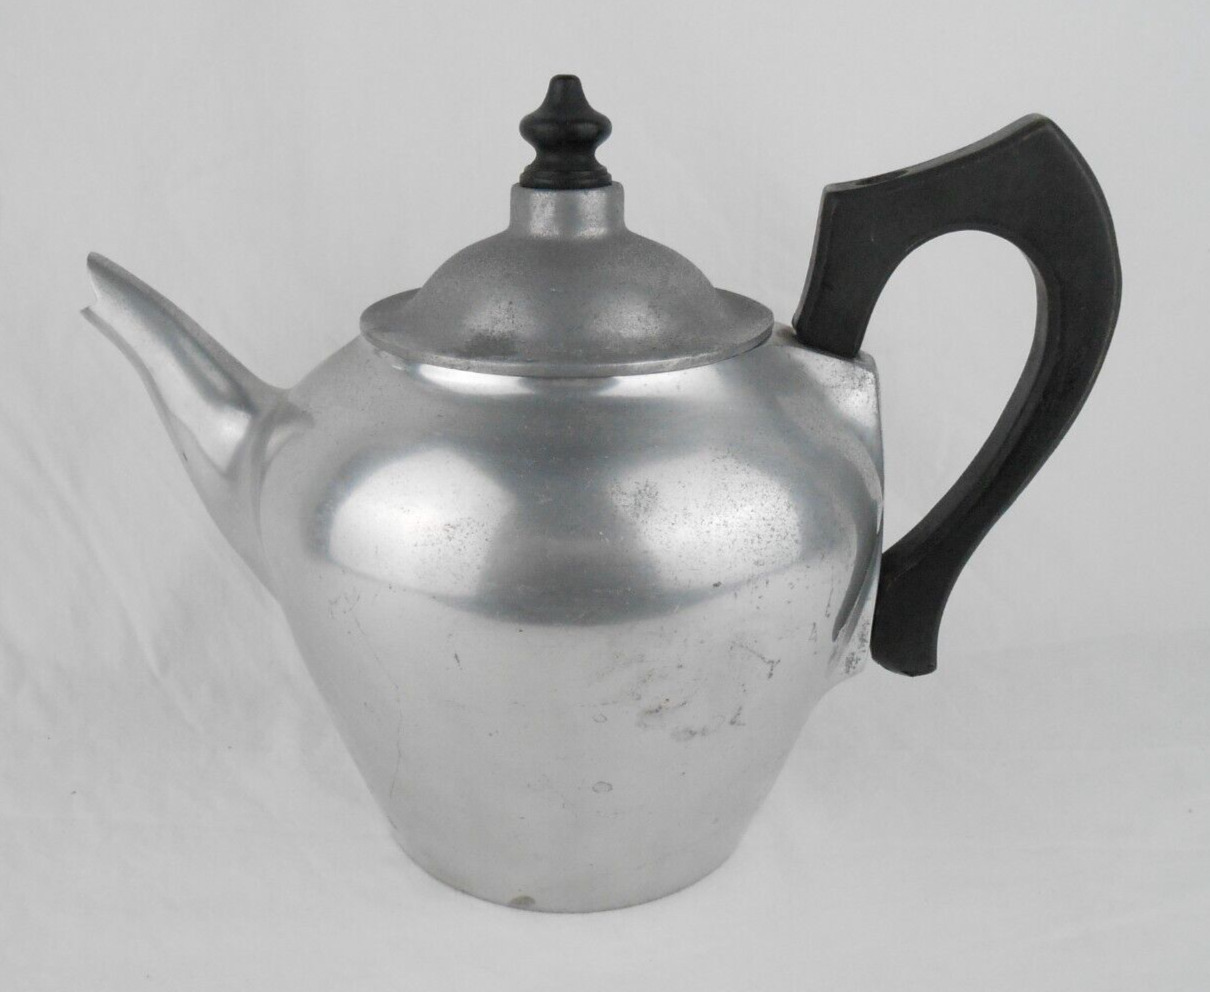 Monarcast Cleveland OH Vintage Cast Aluminum Teapot with Chain Infuser Strainer